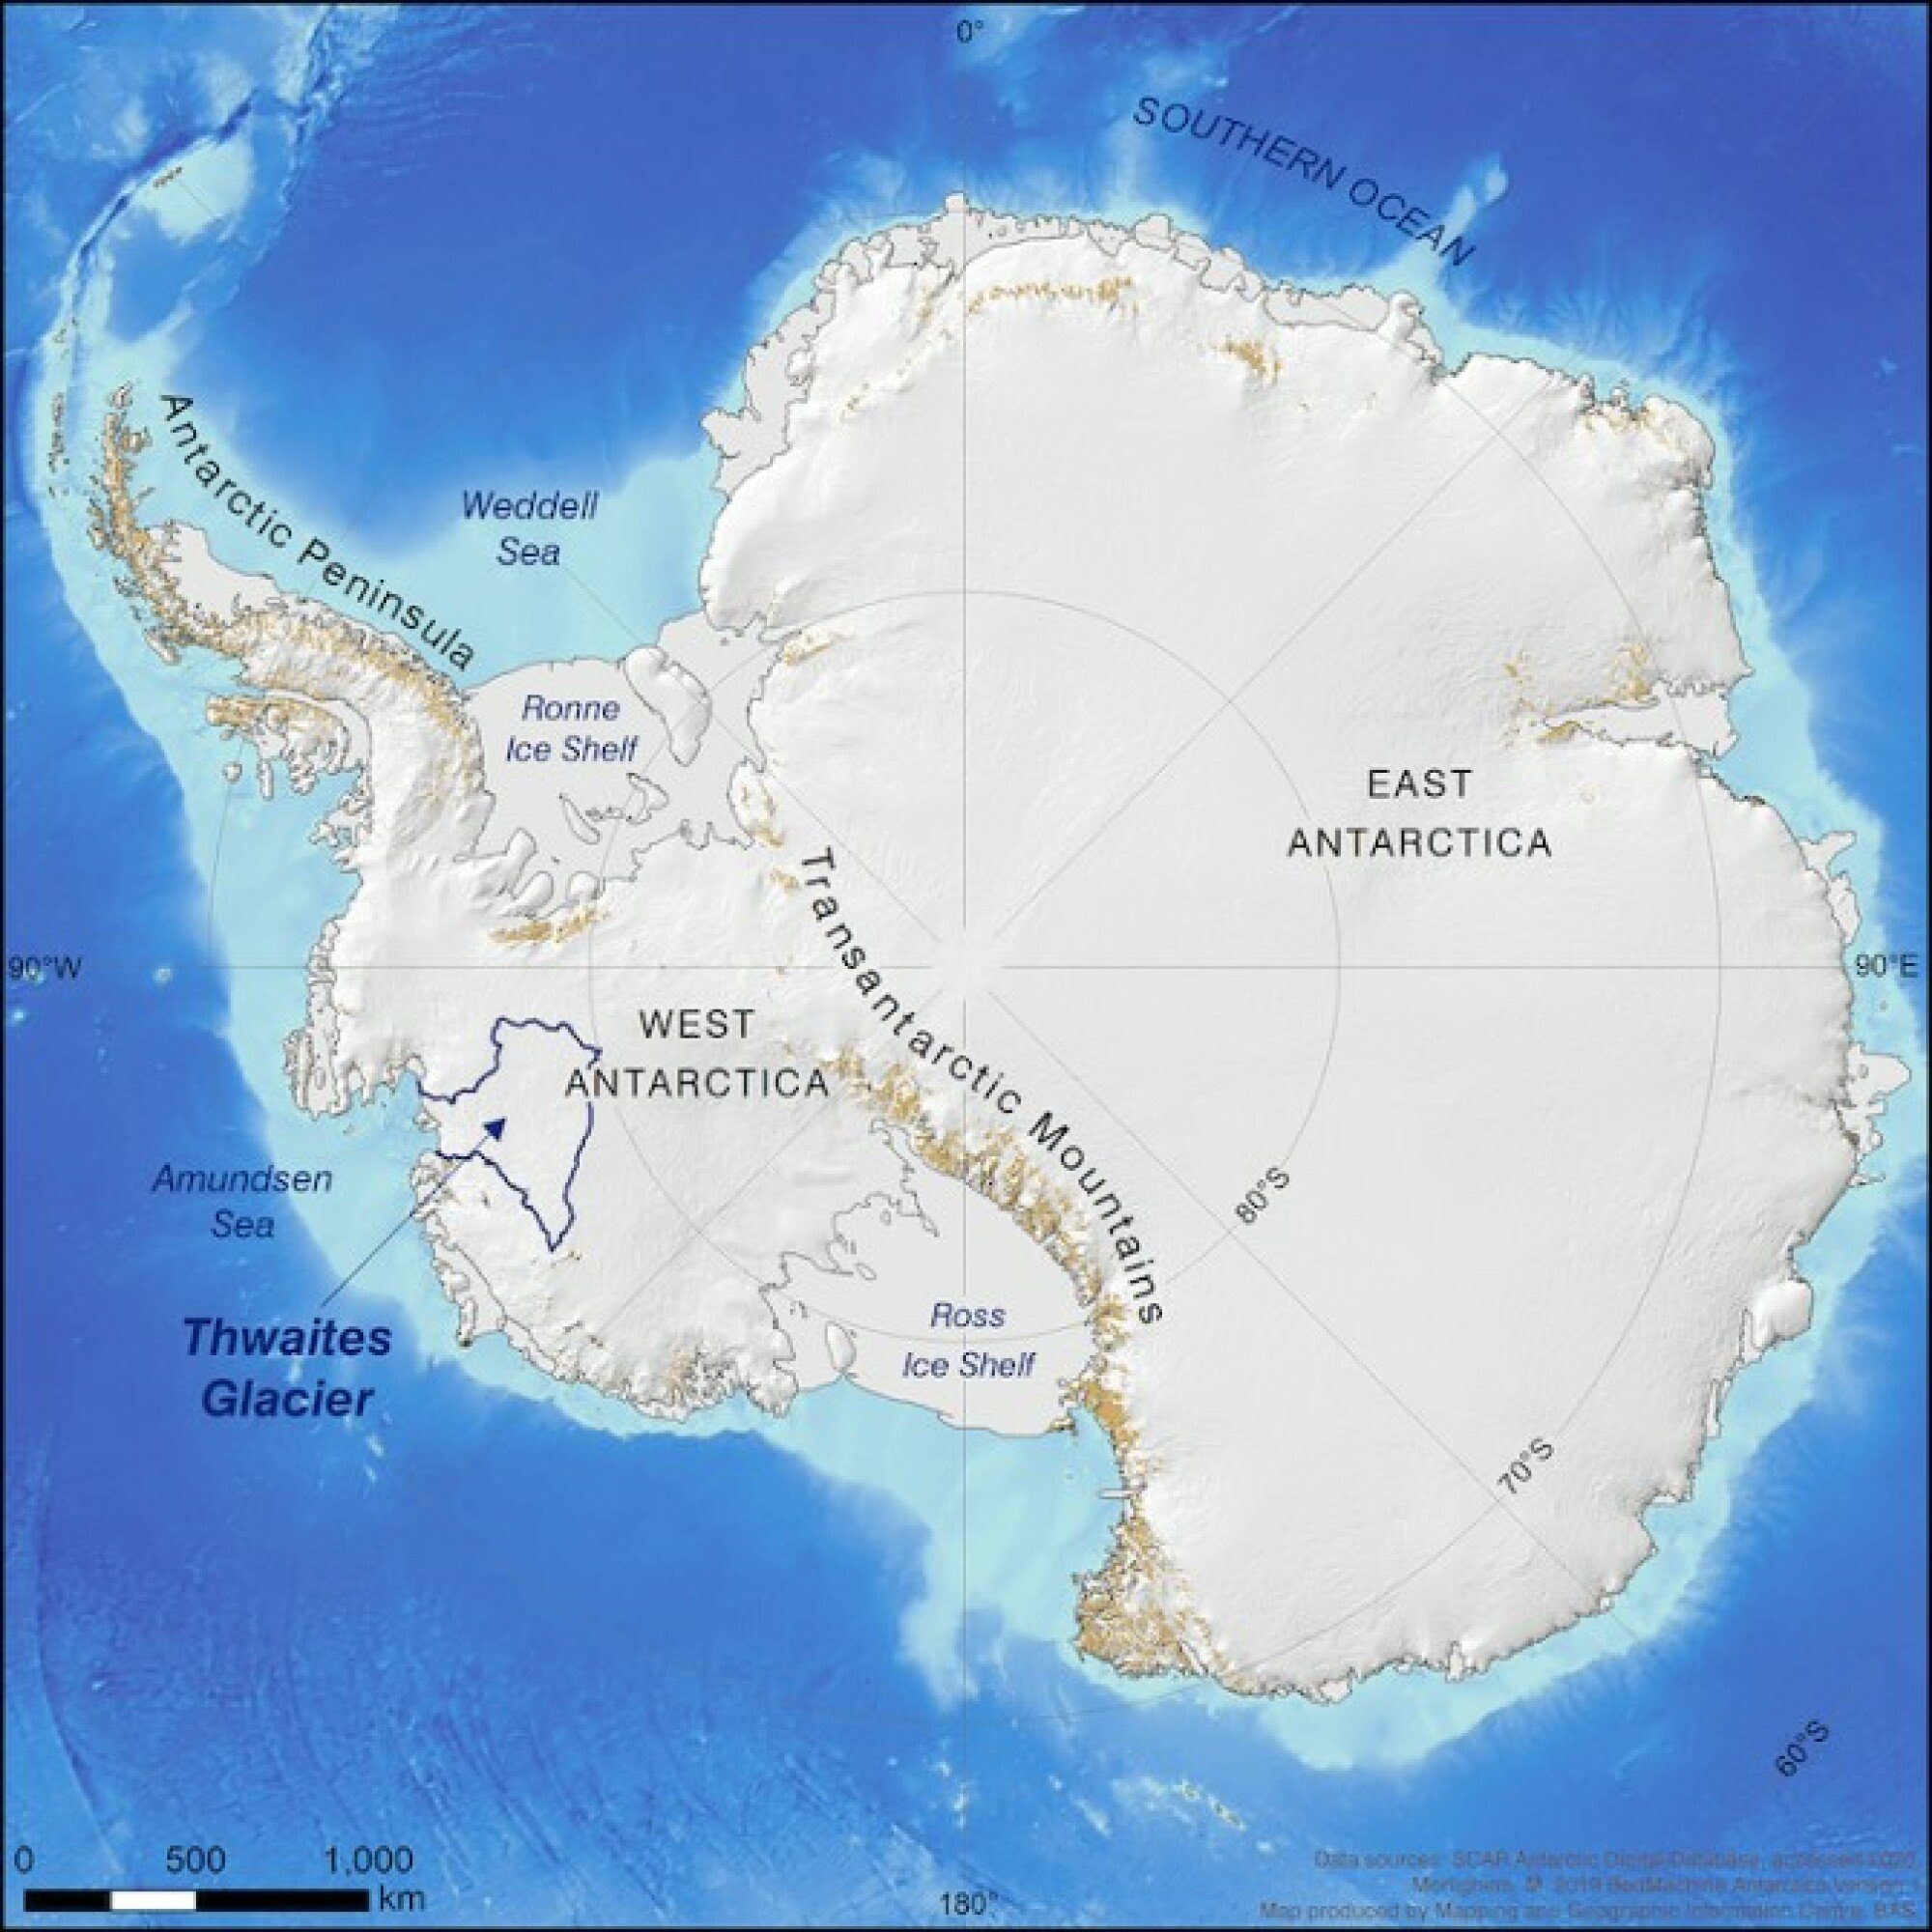 Map of Antarctica with Thwaites Glacier on the left